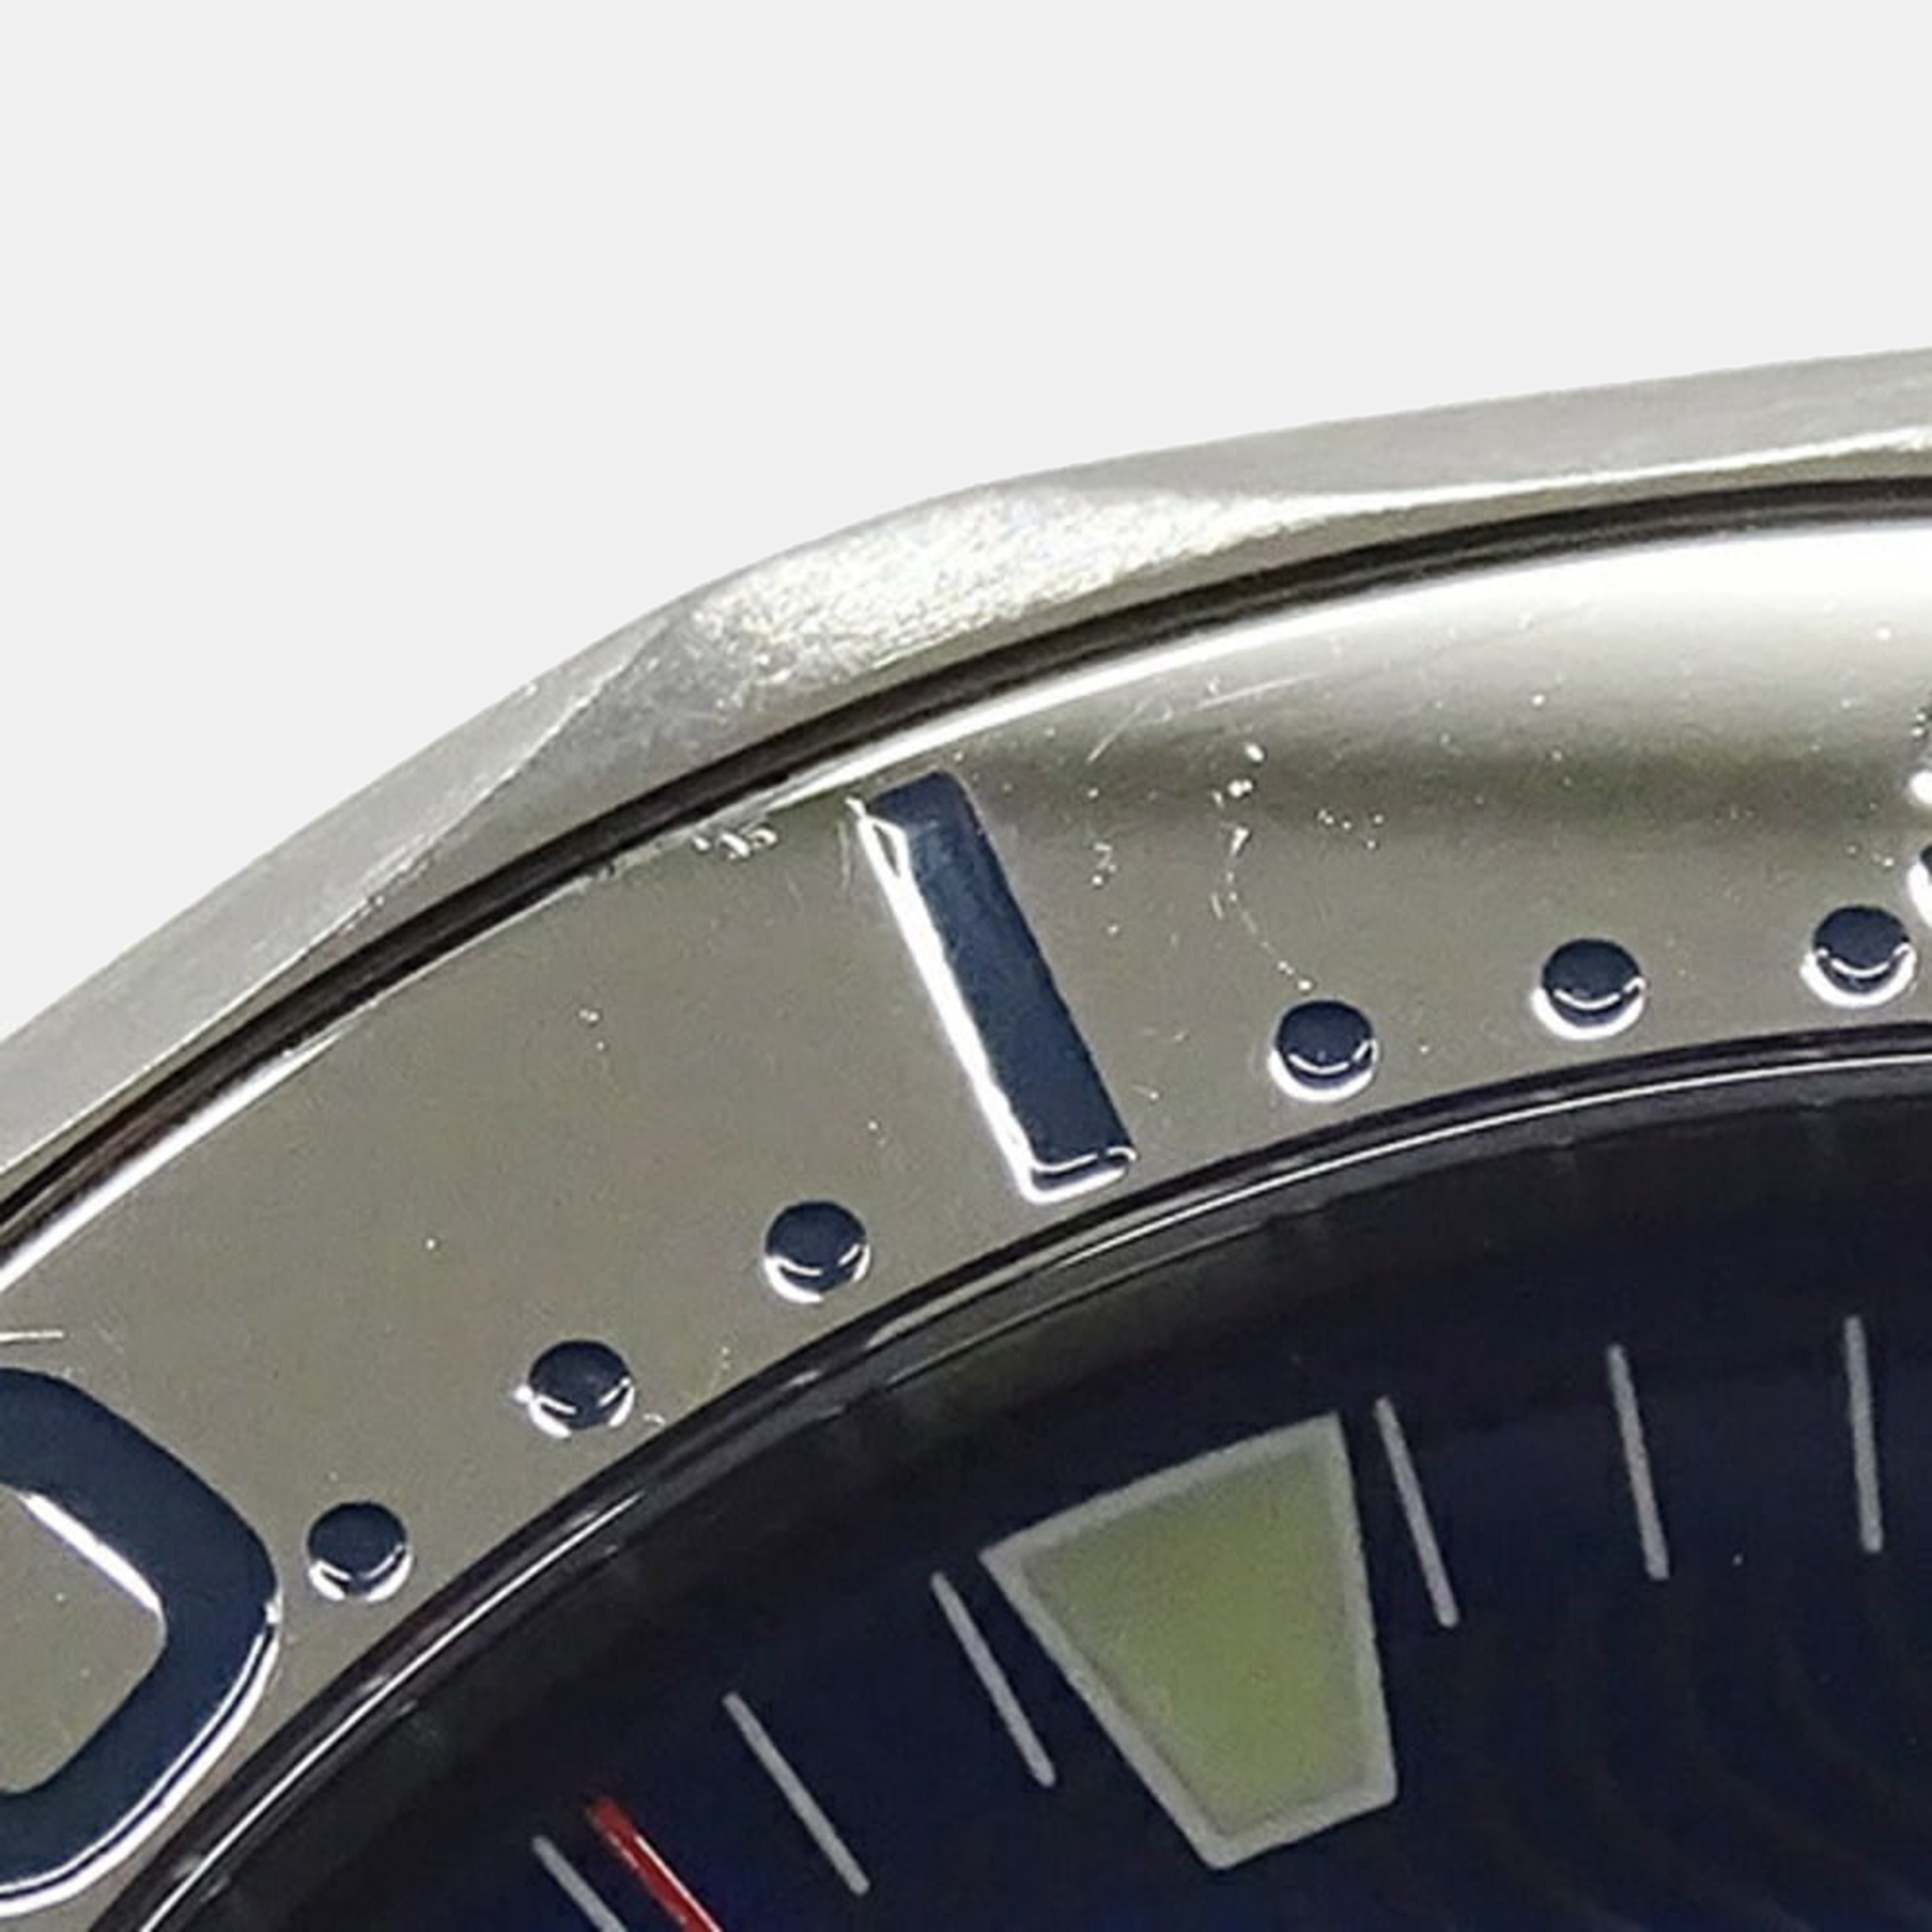 Omega Blue Stainless Steel Seamaster 2265.80 Quartz Men's Wristwatch 41 Mm